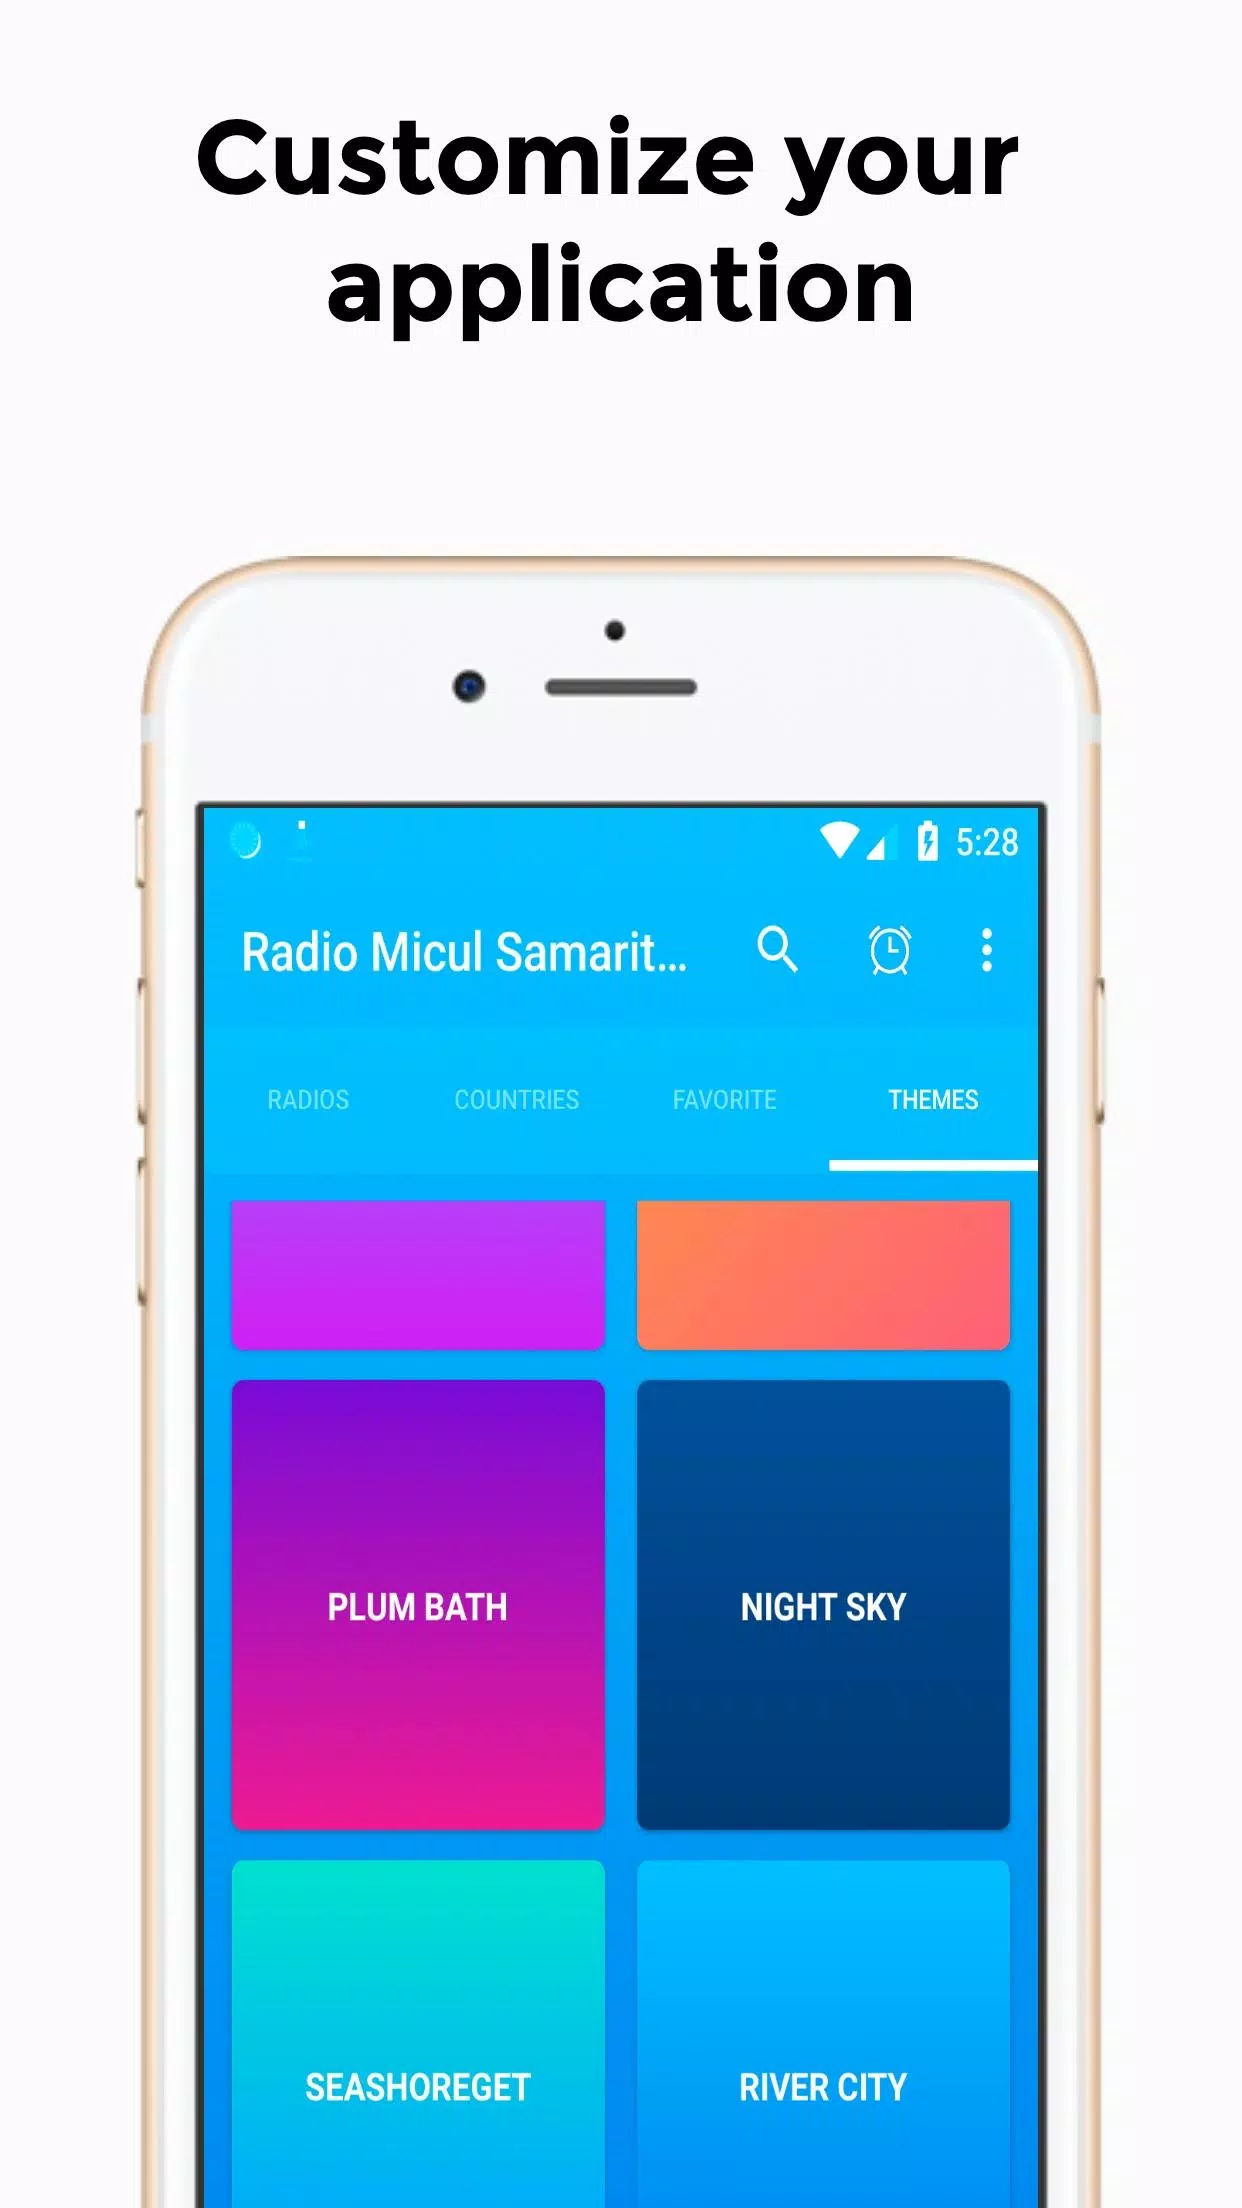 Radio Micul Samaritean APK for Android Download